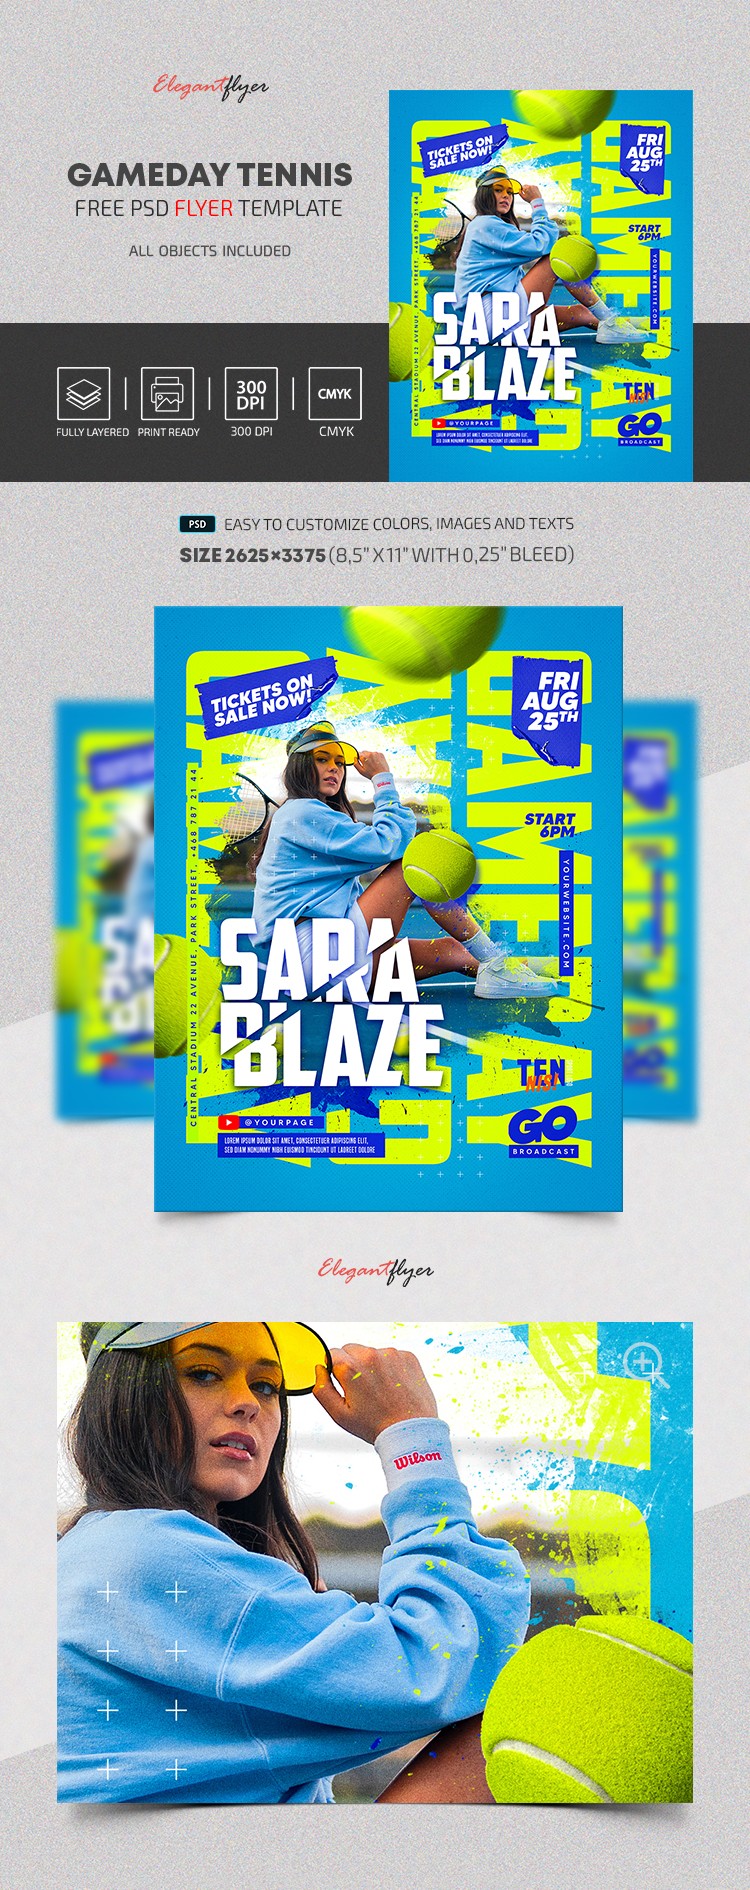 Gameday Tennis Flyer by ElegantFlyer